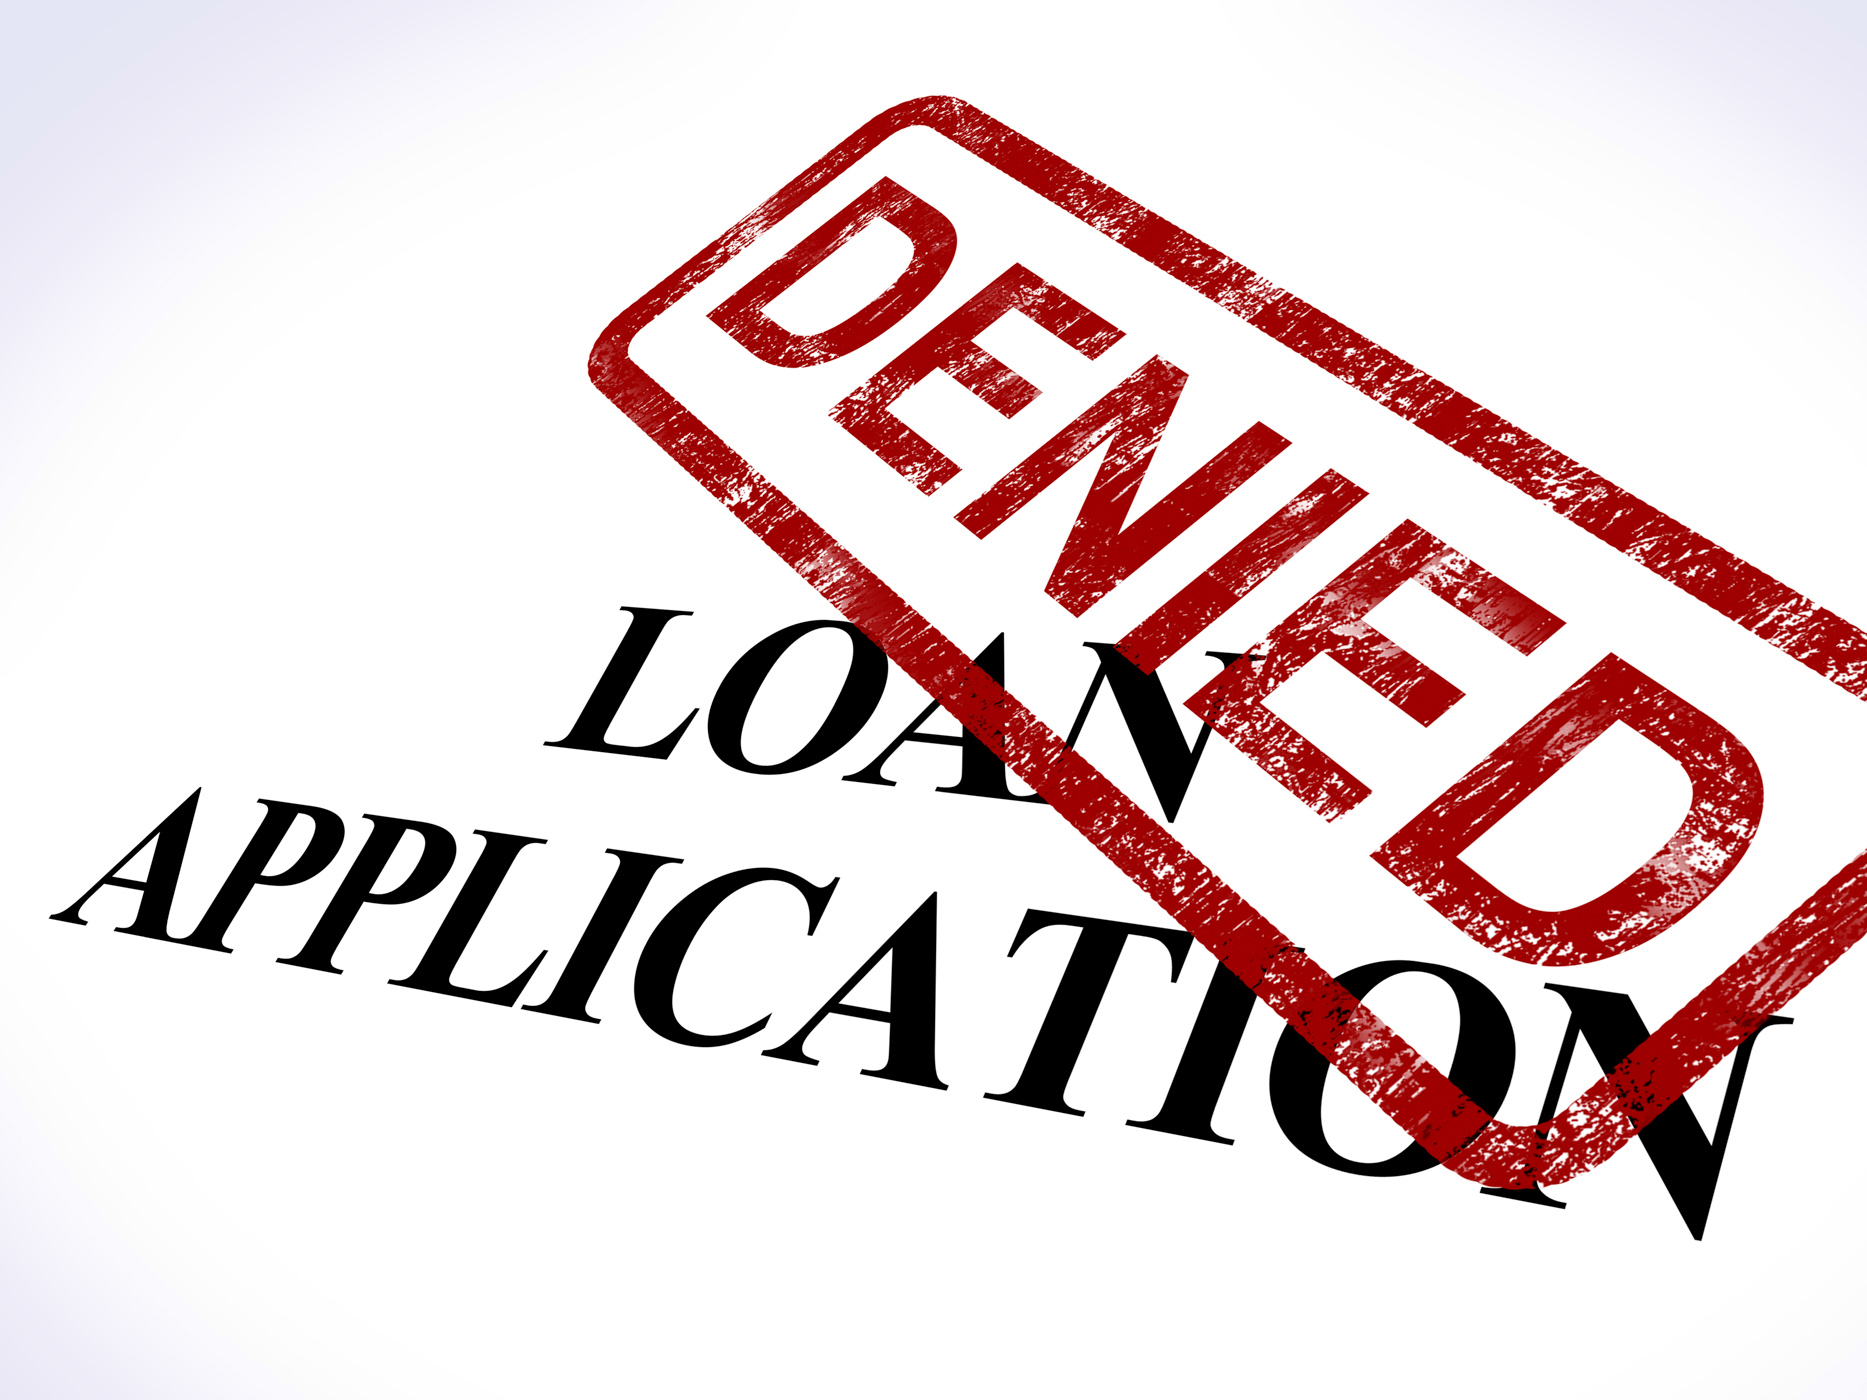 Loan Application Denied Stamp Shows Credit Rejected, Application, Rejection, Rejected, Reject, HQ Photo